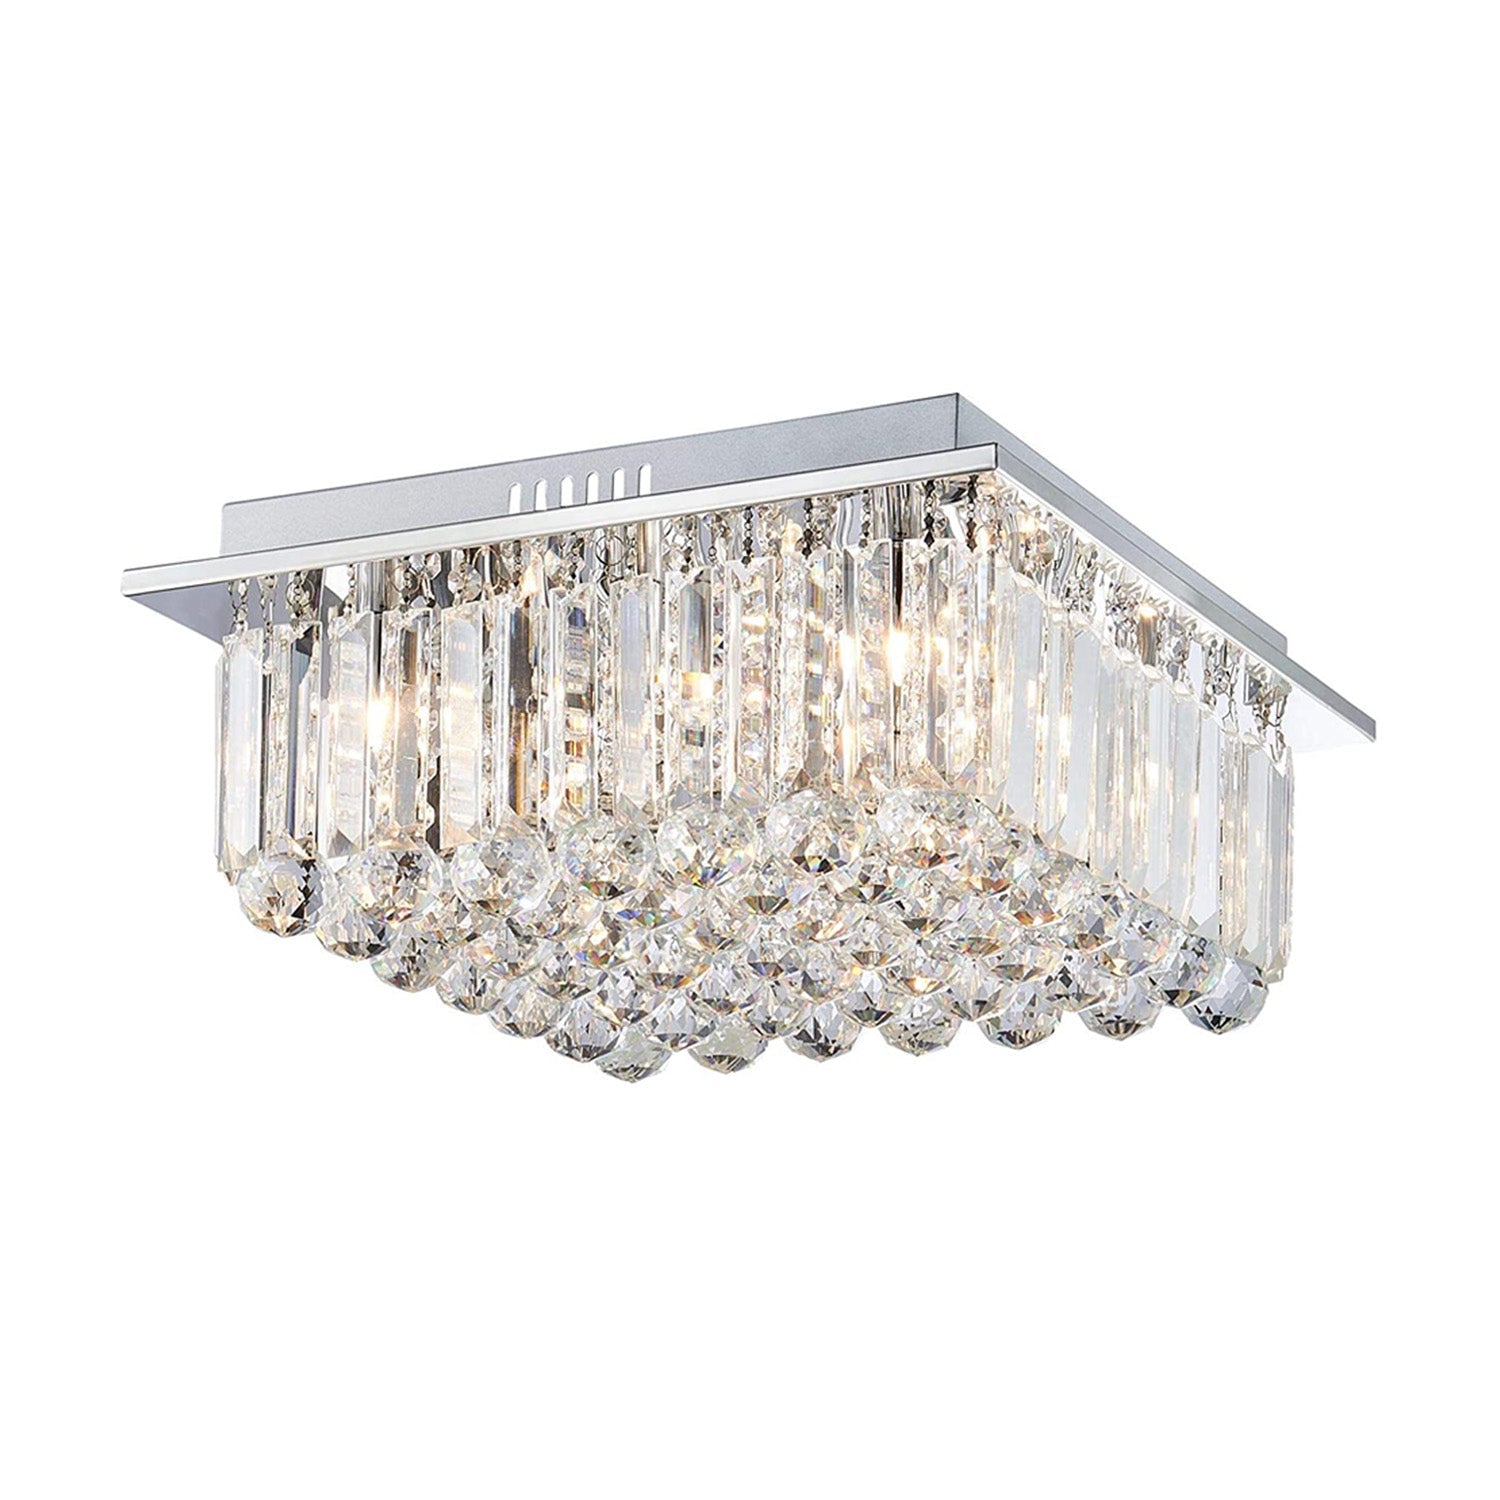 Square Rain Drop Crystal Ceiling Light - Contemporary Lighting Fixture -